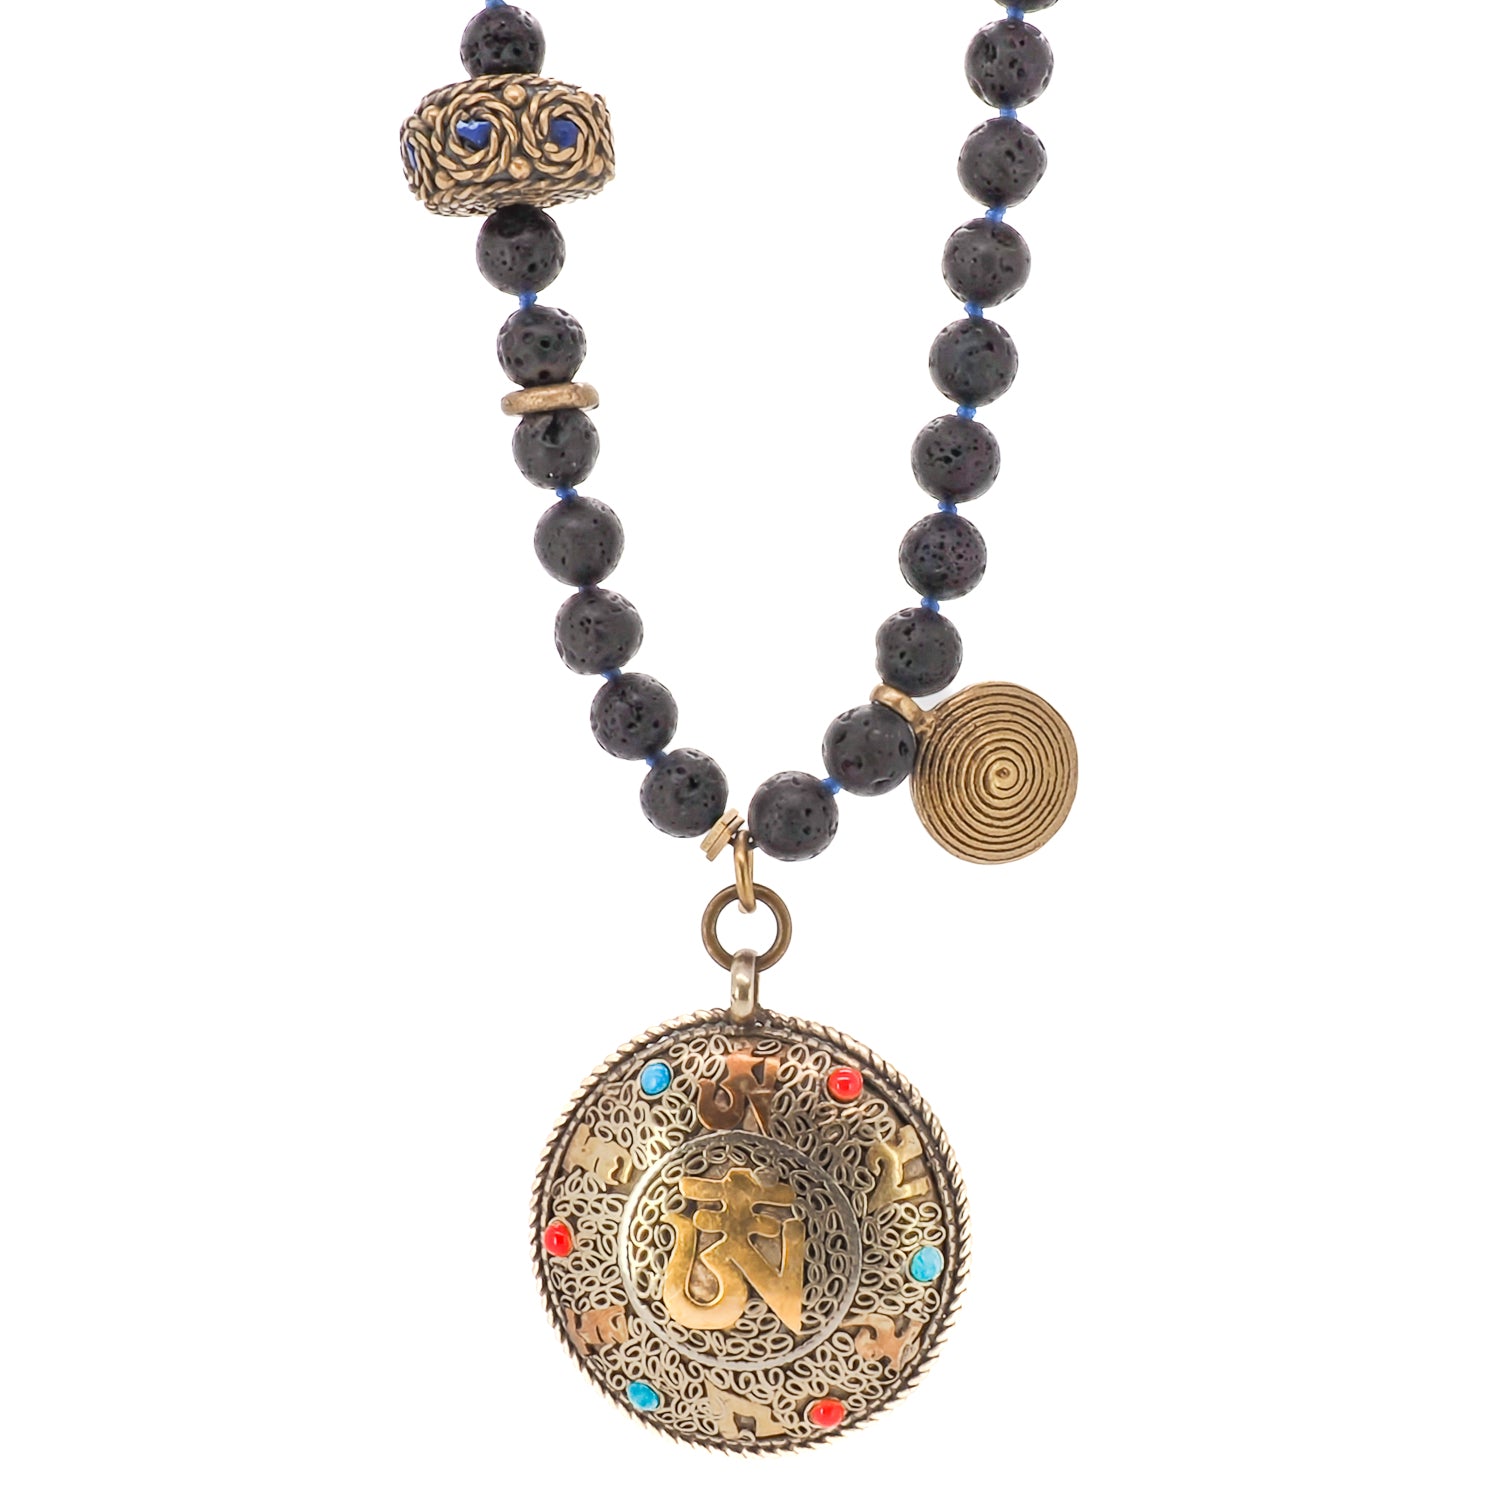 "Black Nepal Om Mala Mantra Necklace" with a beautiful handmade Nepal mantra pendant on a long black lava rock stone bead chain.